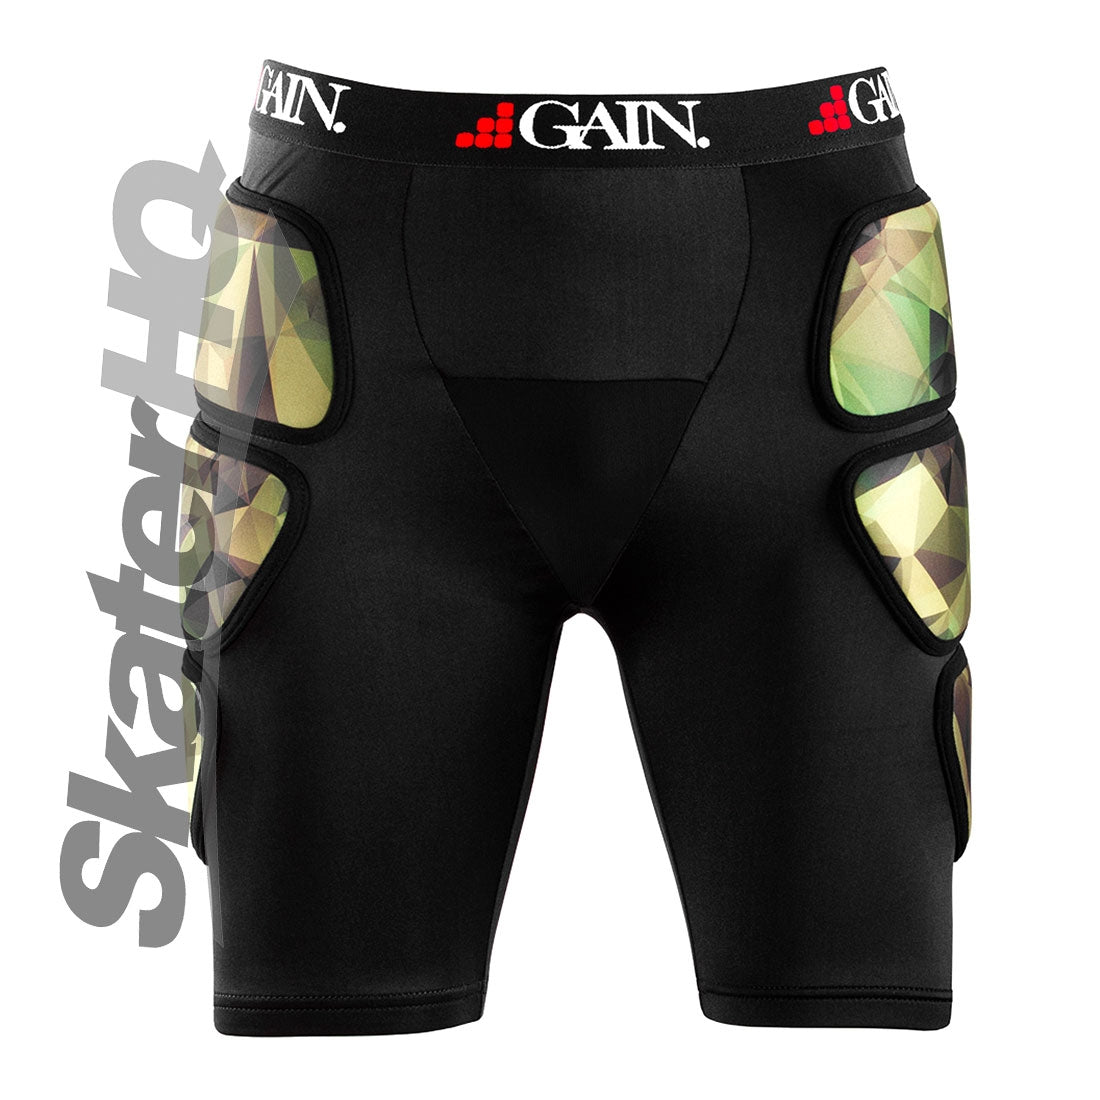 GAIN Sleeper Hip/Bum Pads - Camo - L Protective Gear